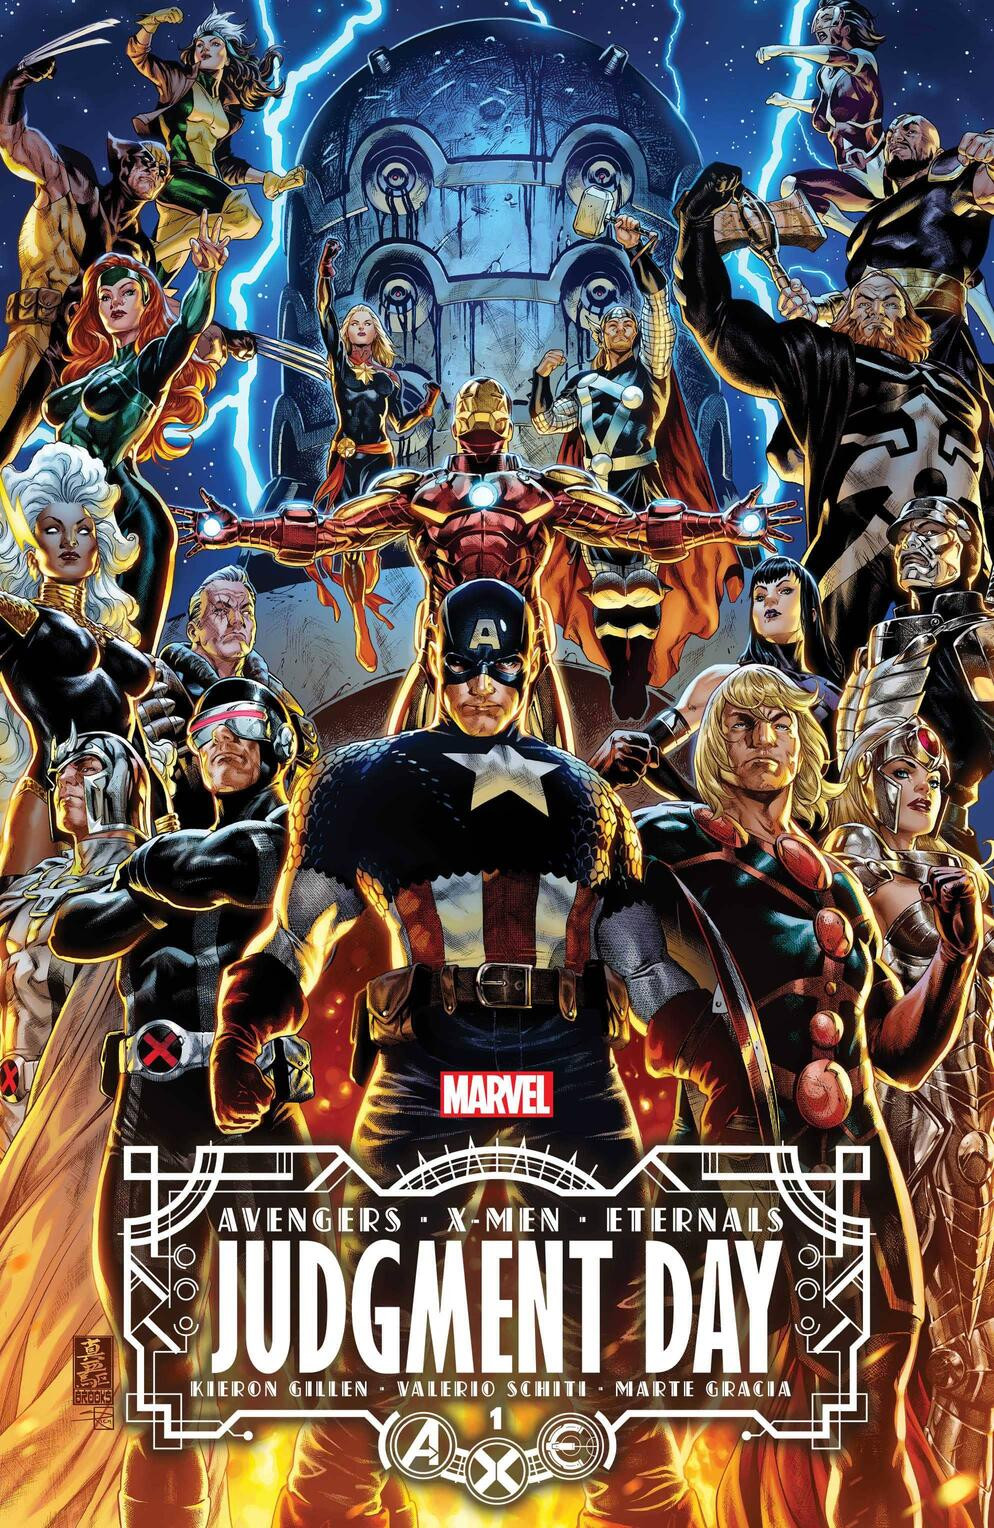 Marvel Judgement Day Avengers X-Men Eternals